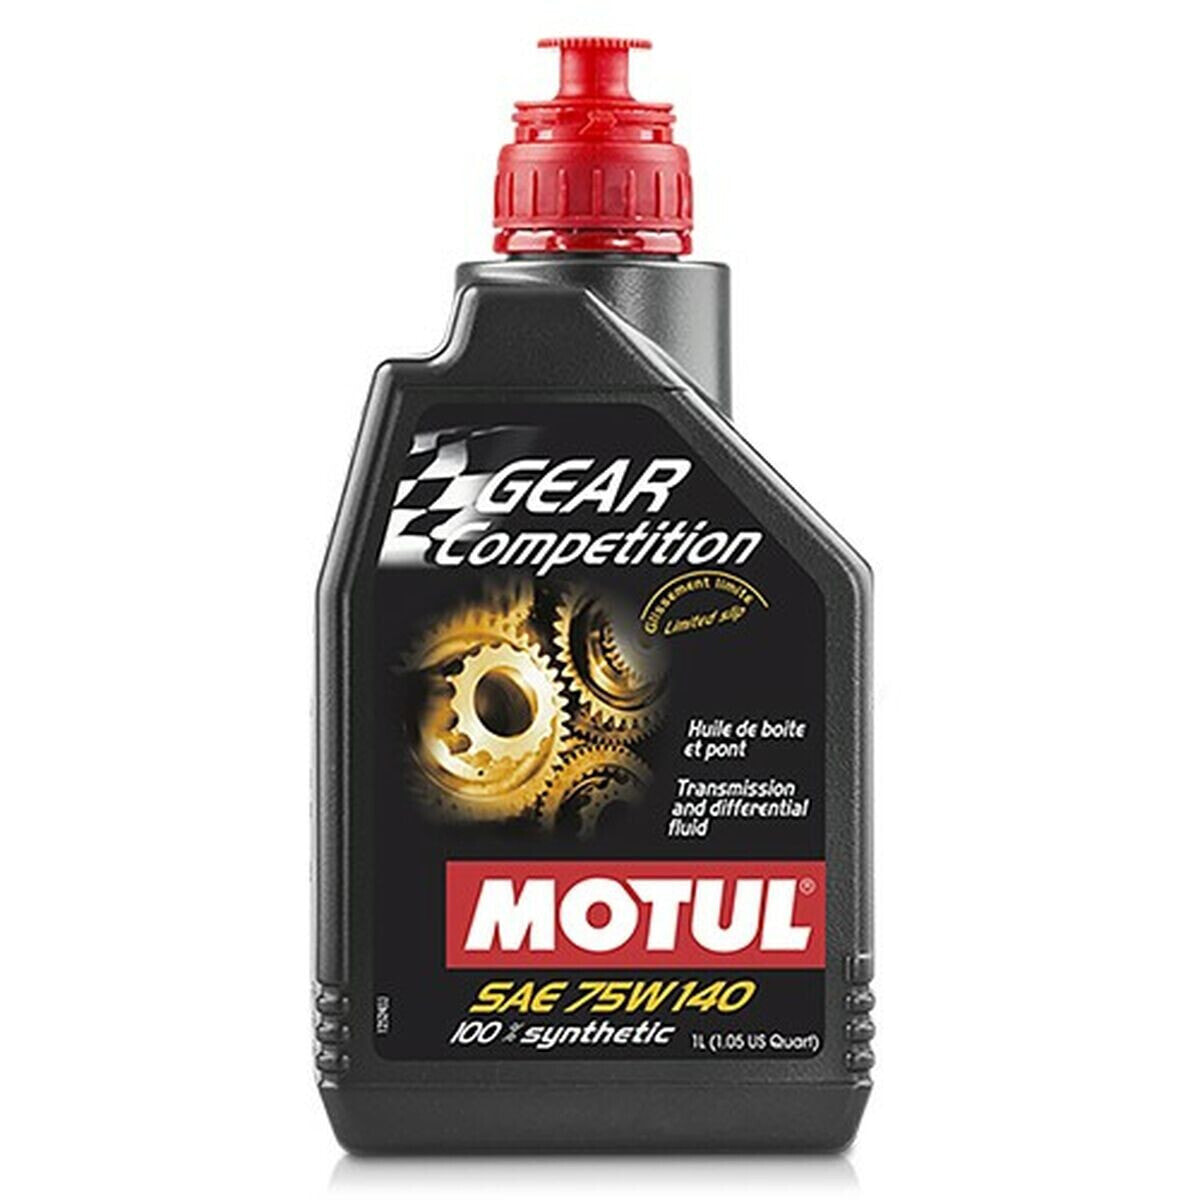 Car Motor Oil Motul GEAR Competition 75W140 1 L